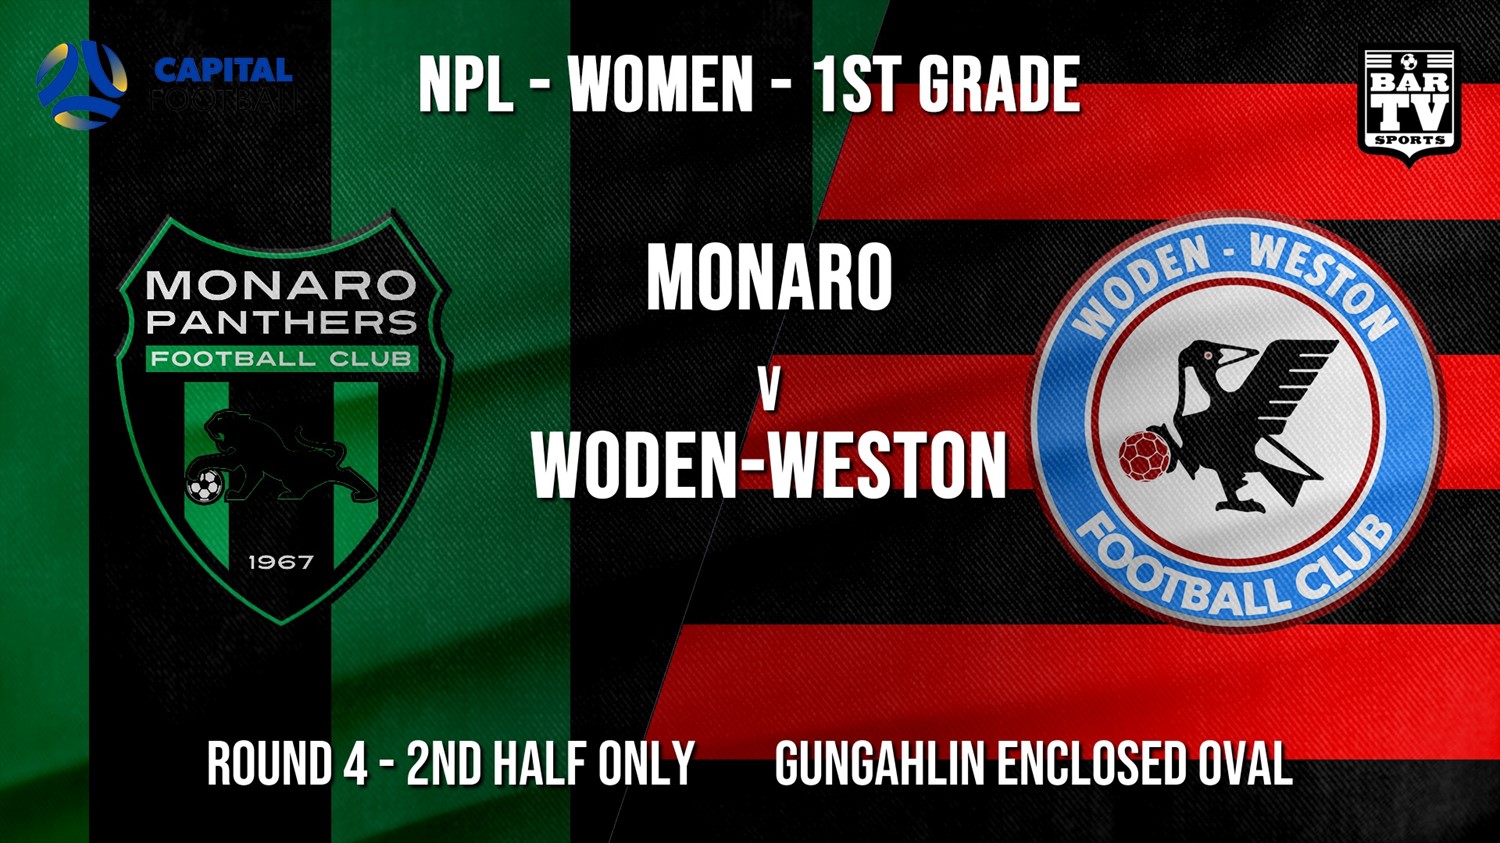 NPLW - Capital Round 4 - 2nd Half only - Monaro Panthers FC (women) v Woden-Weston FC (women) Minigame Slate Image